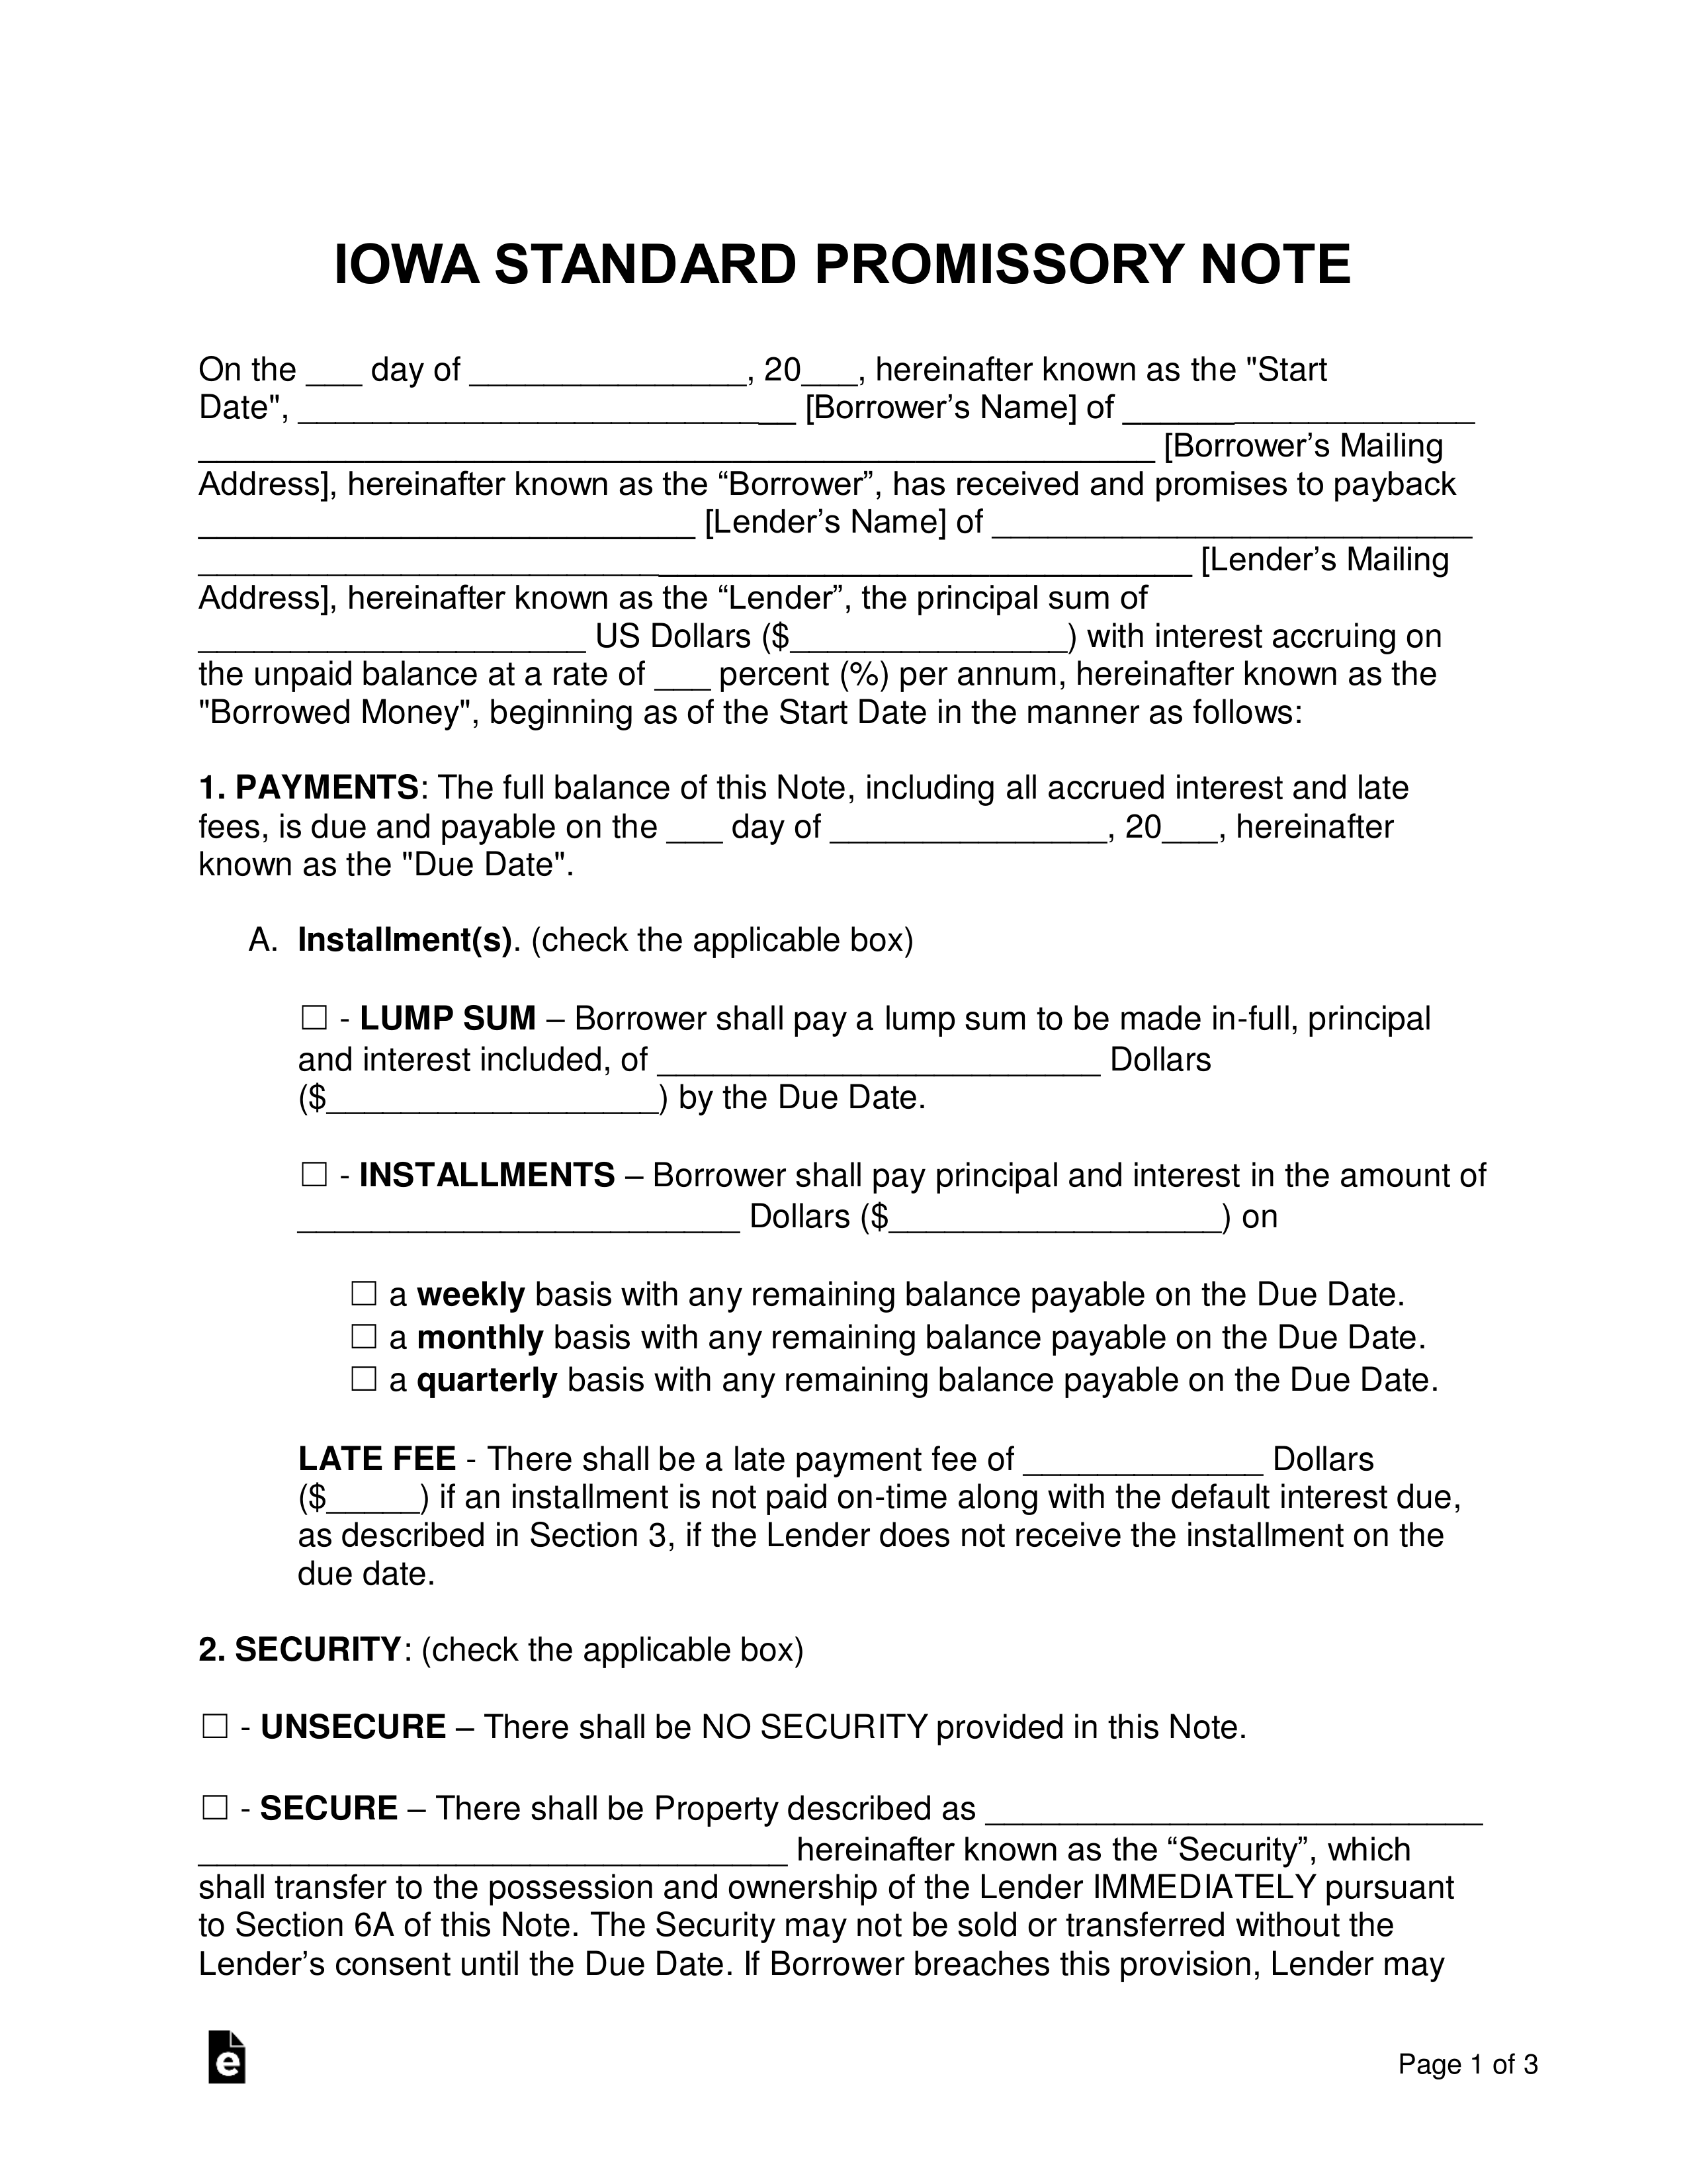 Iowa Promissory Note Templates (2)